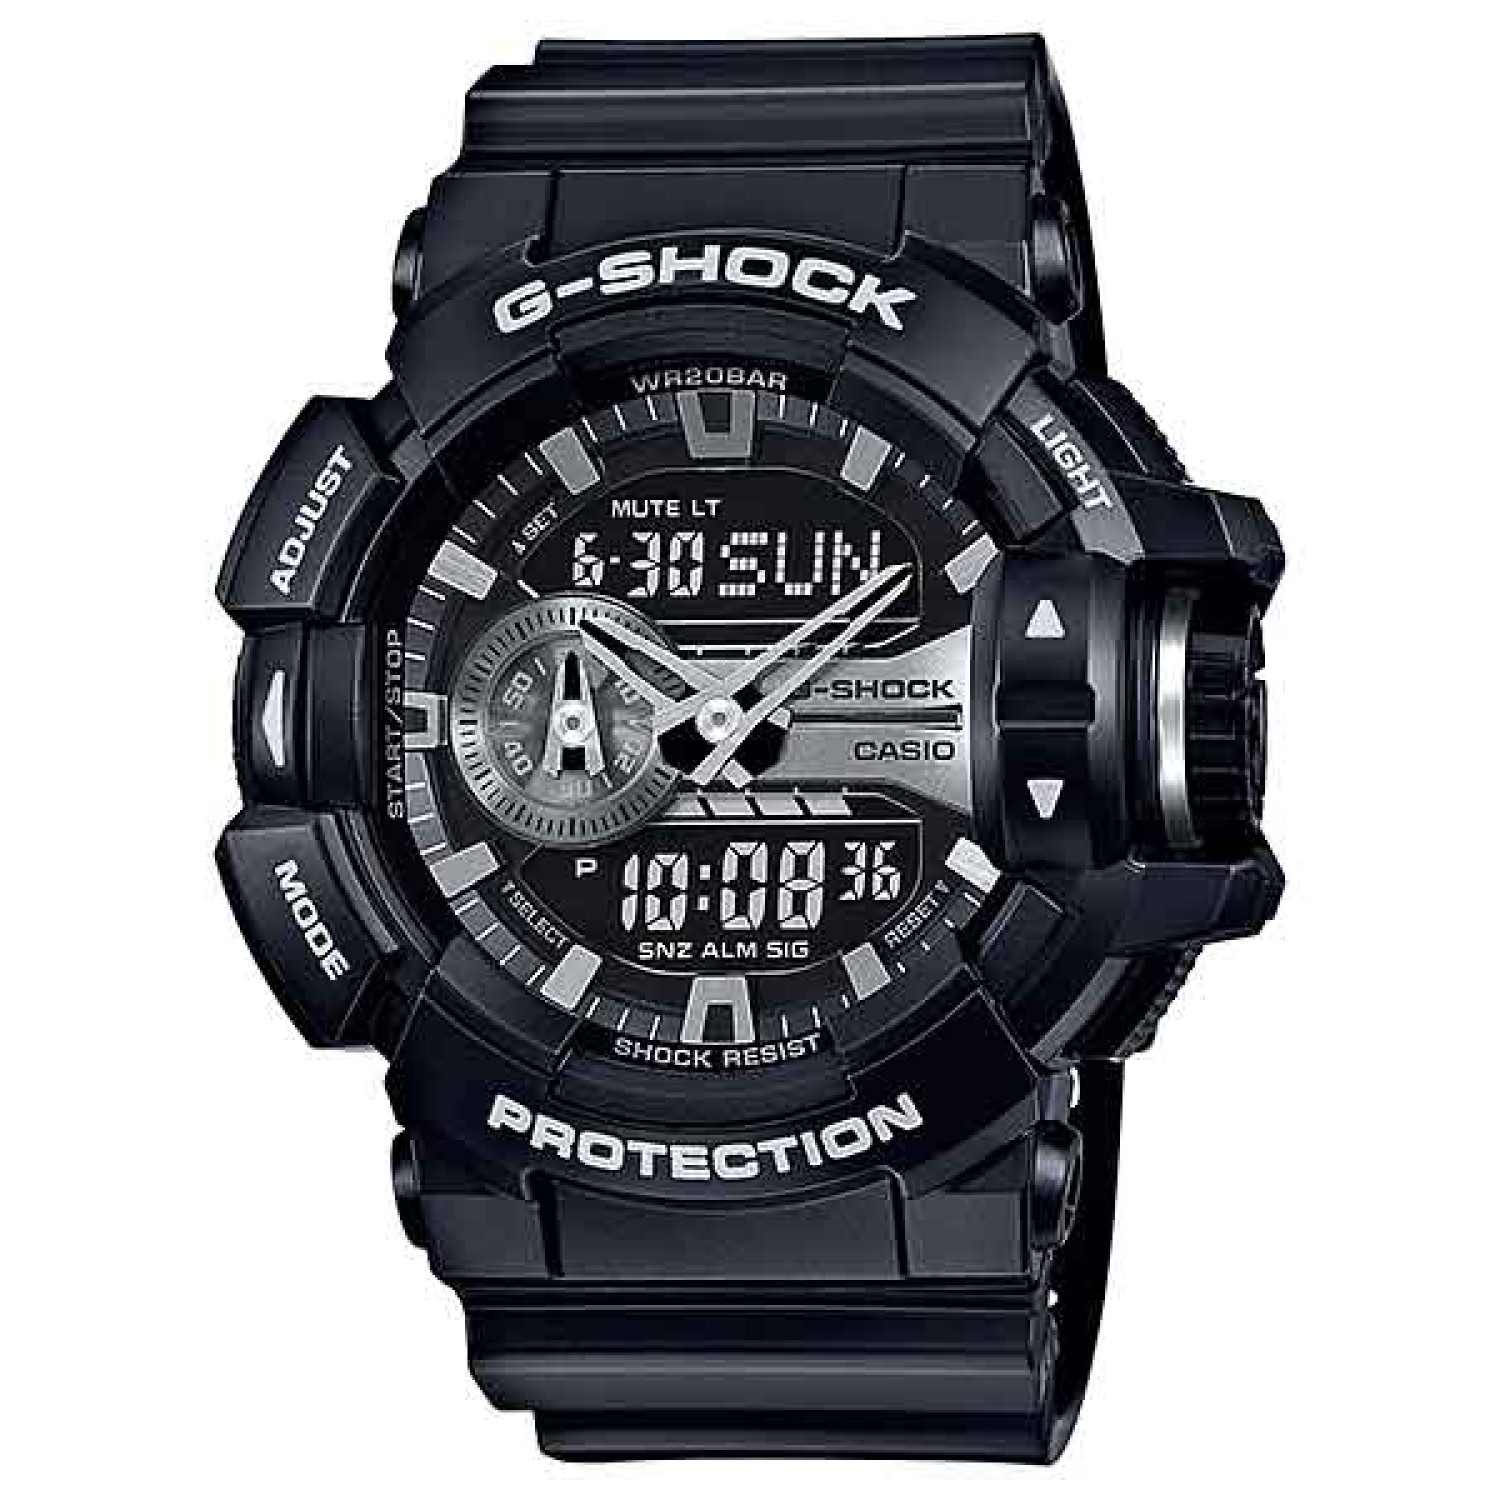 GA400GB-1A G-SHOCK Black and Silver.casio watches nz sale $319.00